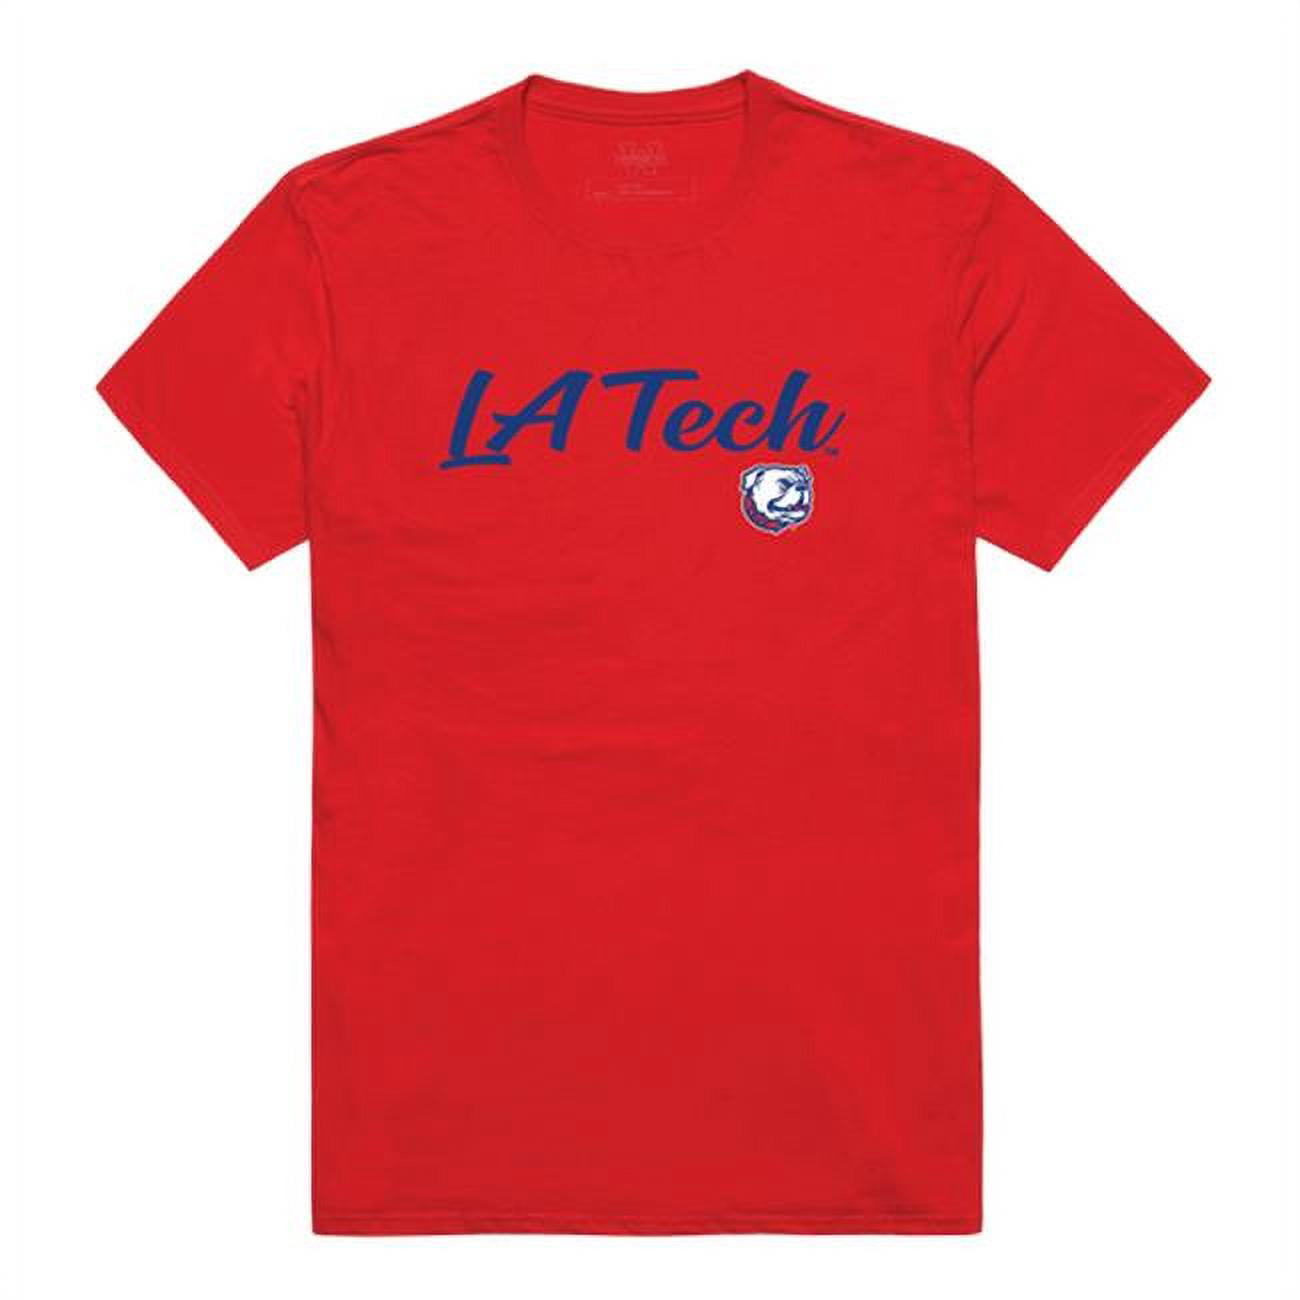 W Republic Products 554-419-RED-01 Louisiana Tech University Script  T-Shirt, Red - Small